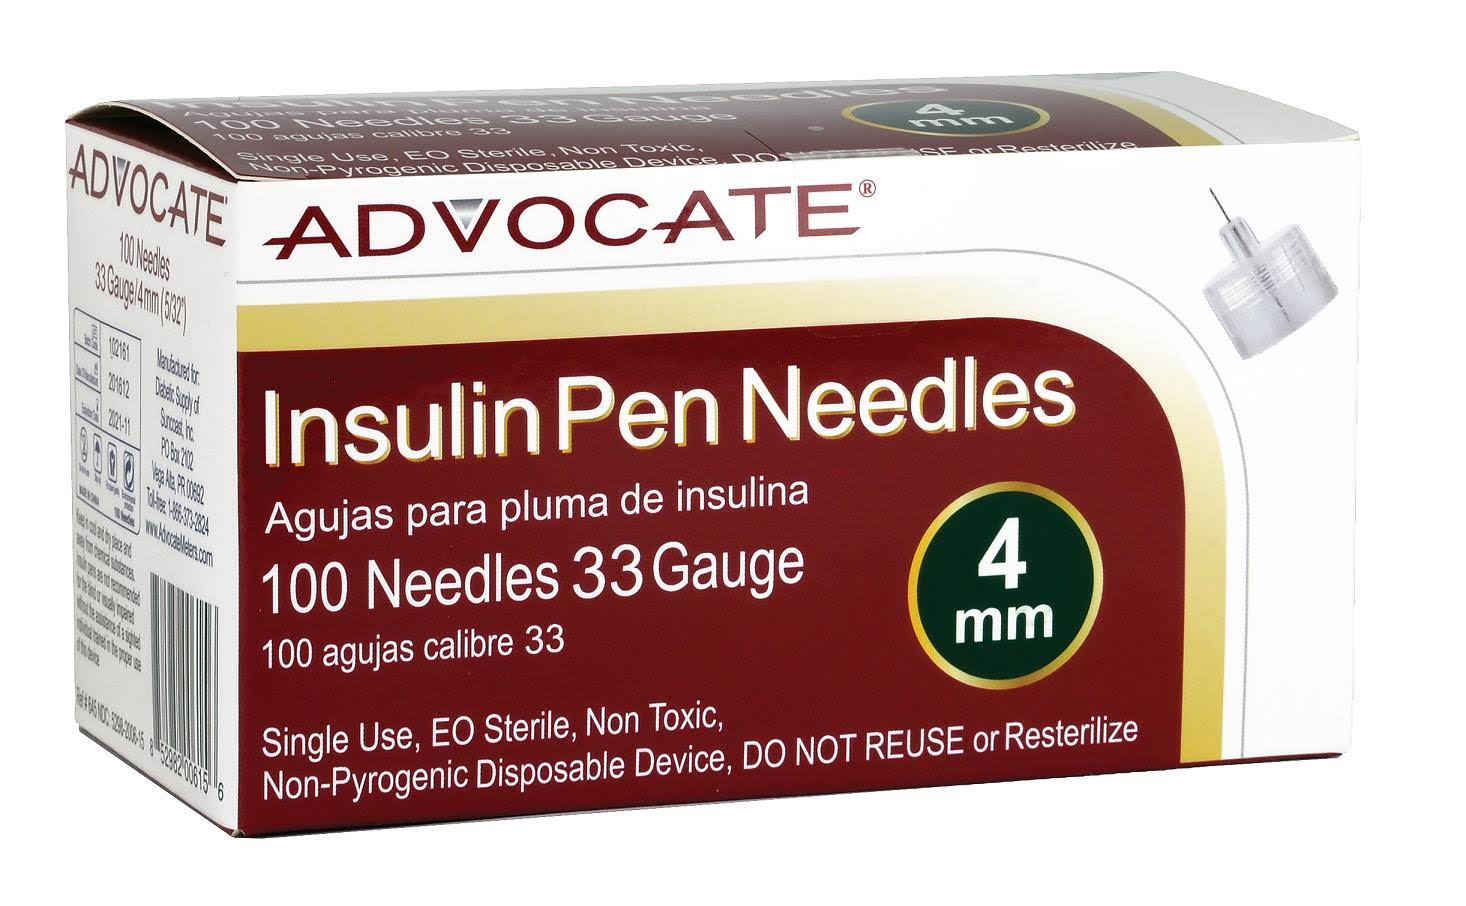 Advocate Insulin Pen Needle - 33g, 4mm, 5/32", 100ct